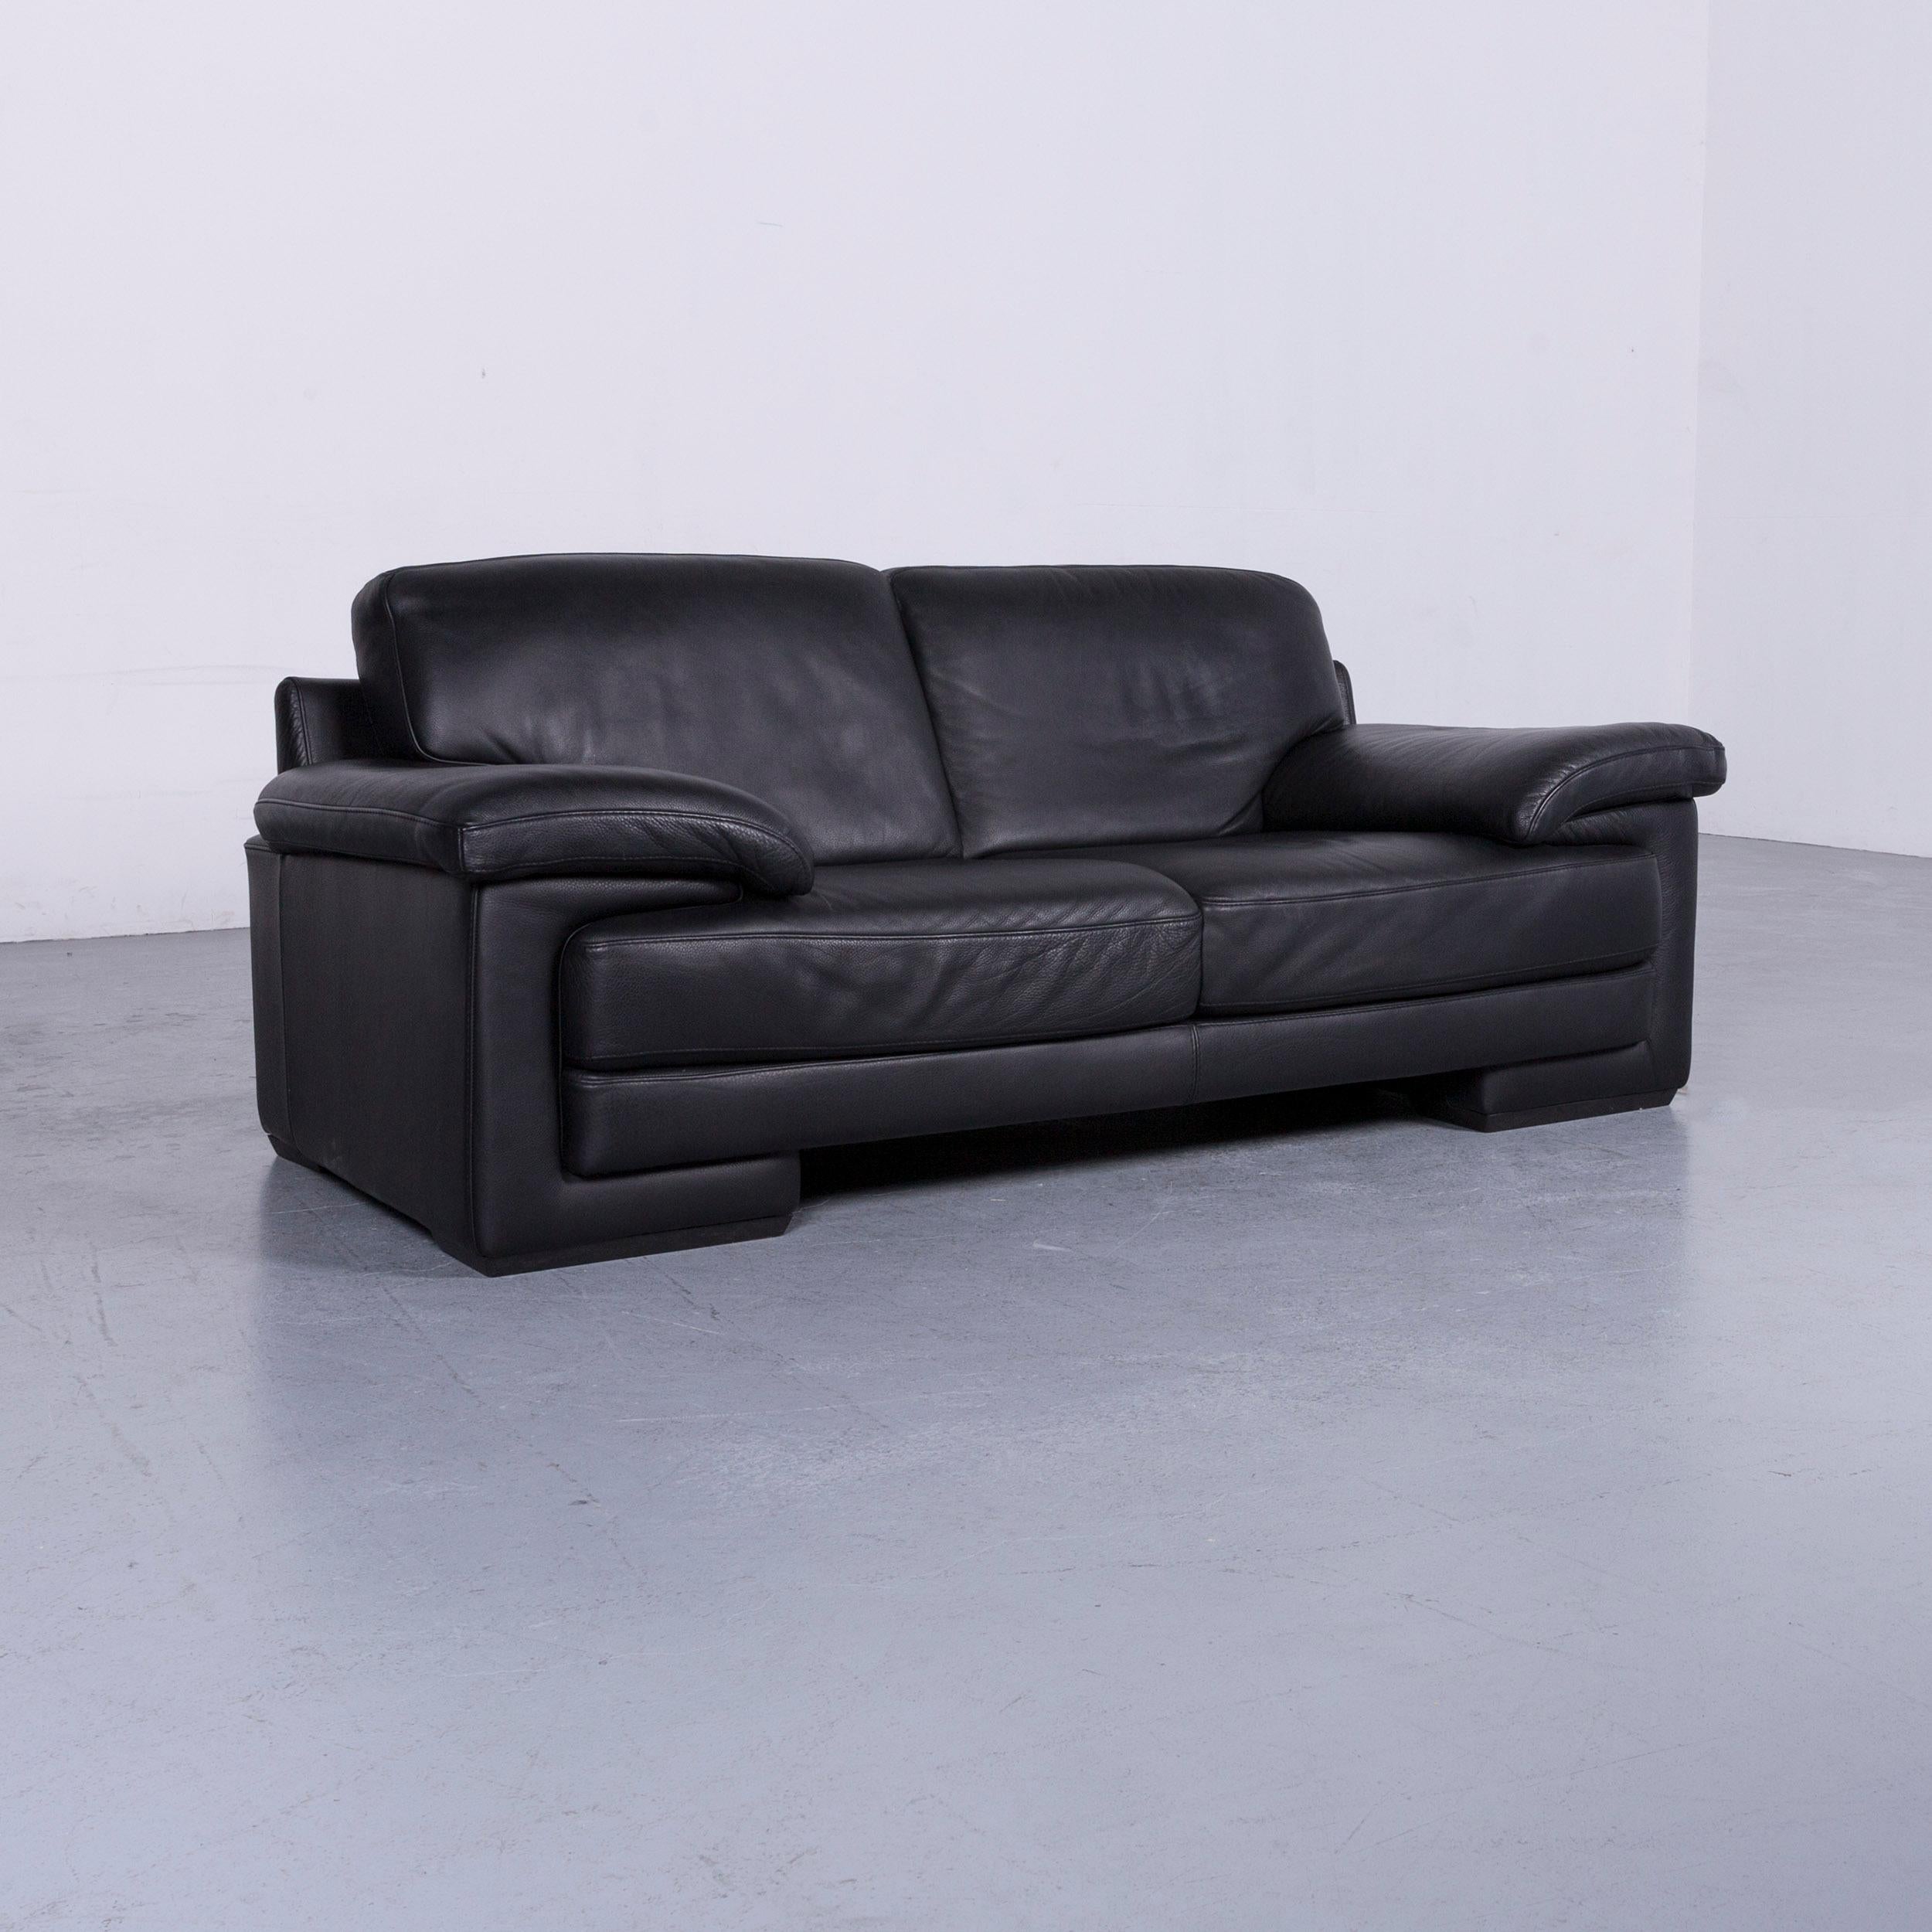 Natuzzi designer leather three-seat sofa couch in black.